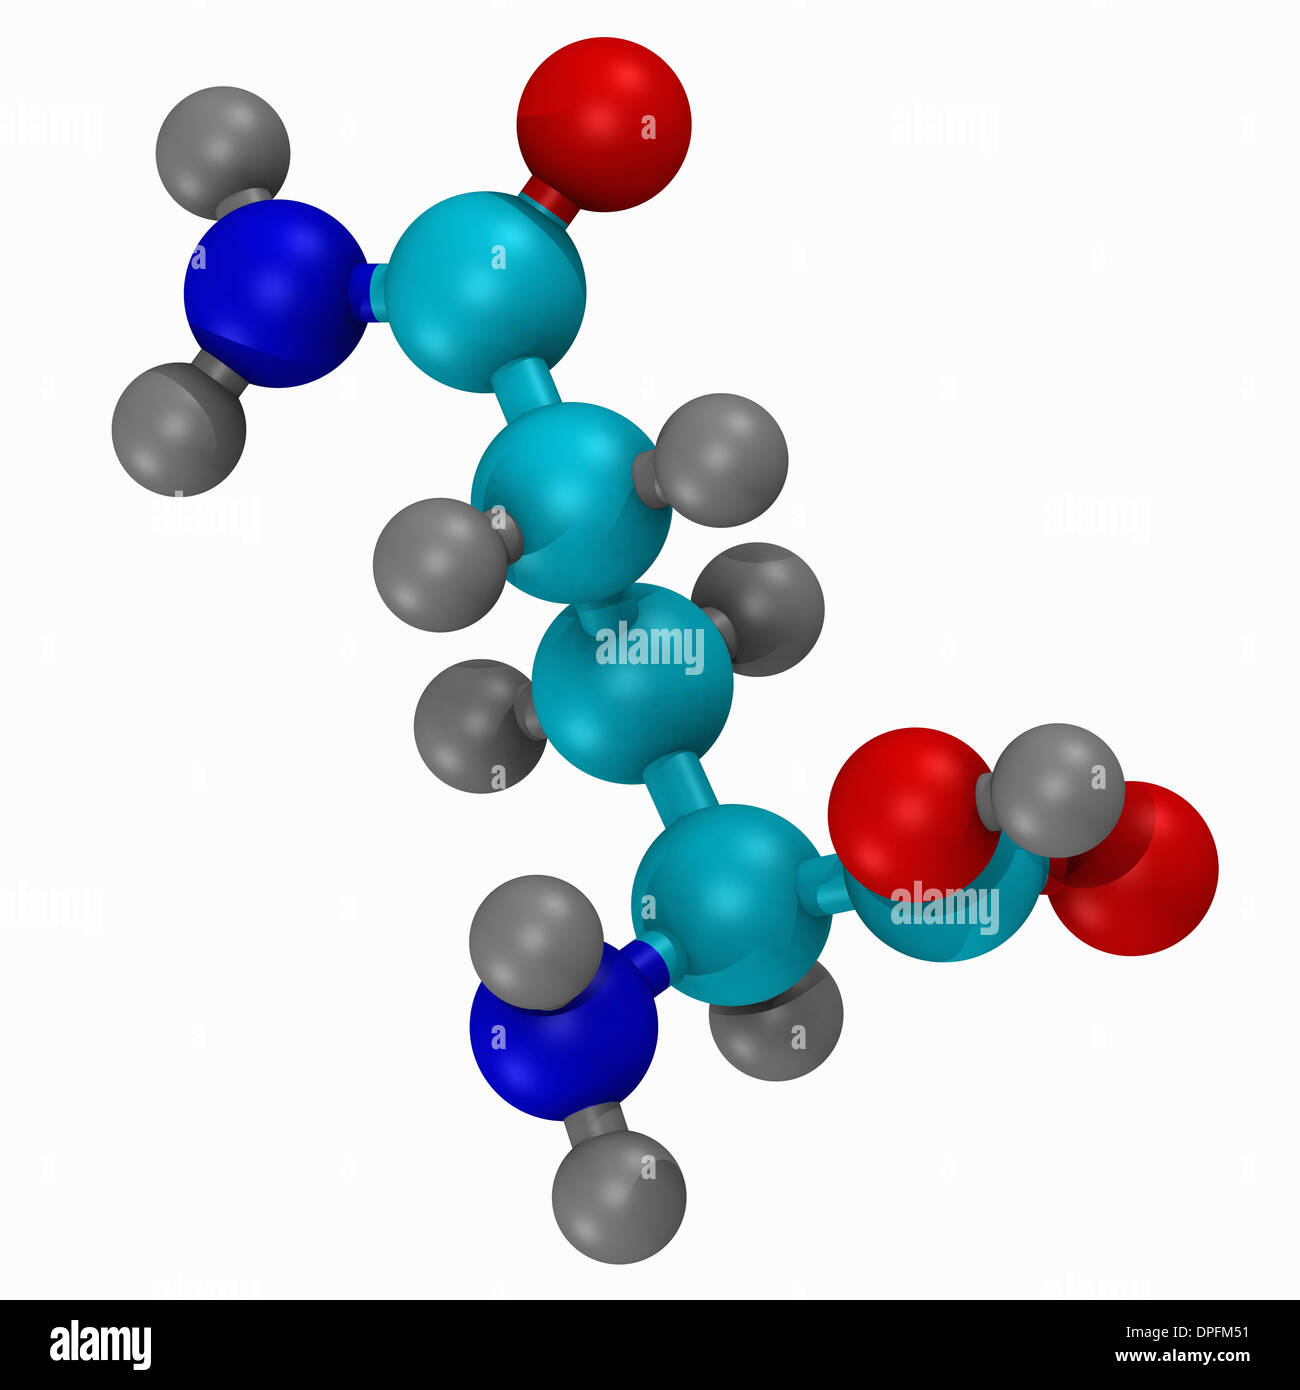 ball and stick model of the amino acid, glutamine Stock Photo